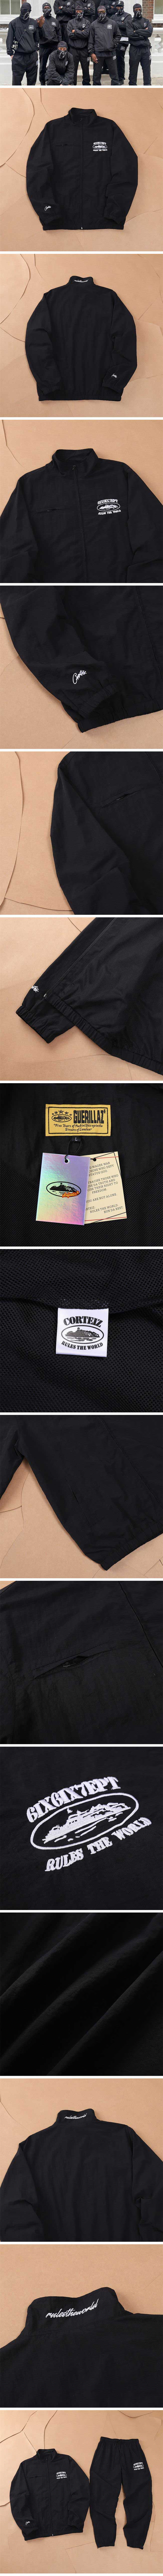 Corteiz OG Island Logo Truck Jacket Black/White コーテイズ 刺繍ロゴ トラックジャケット セットアップ可